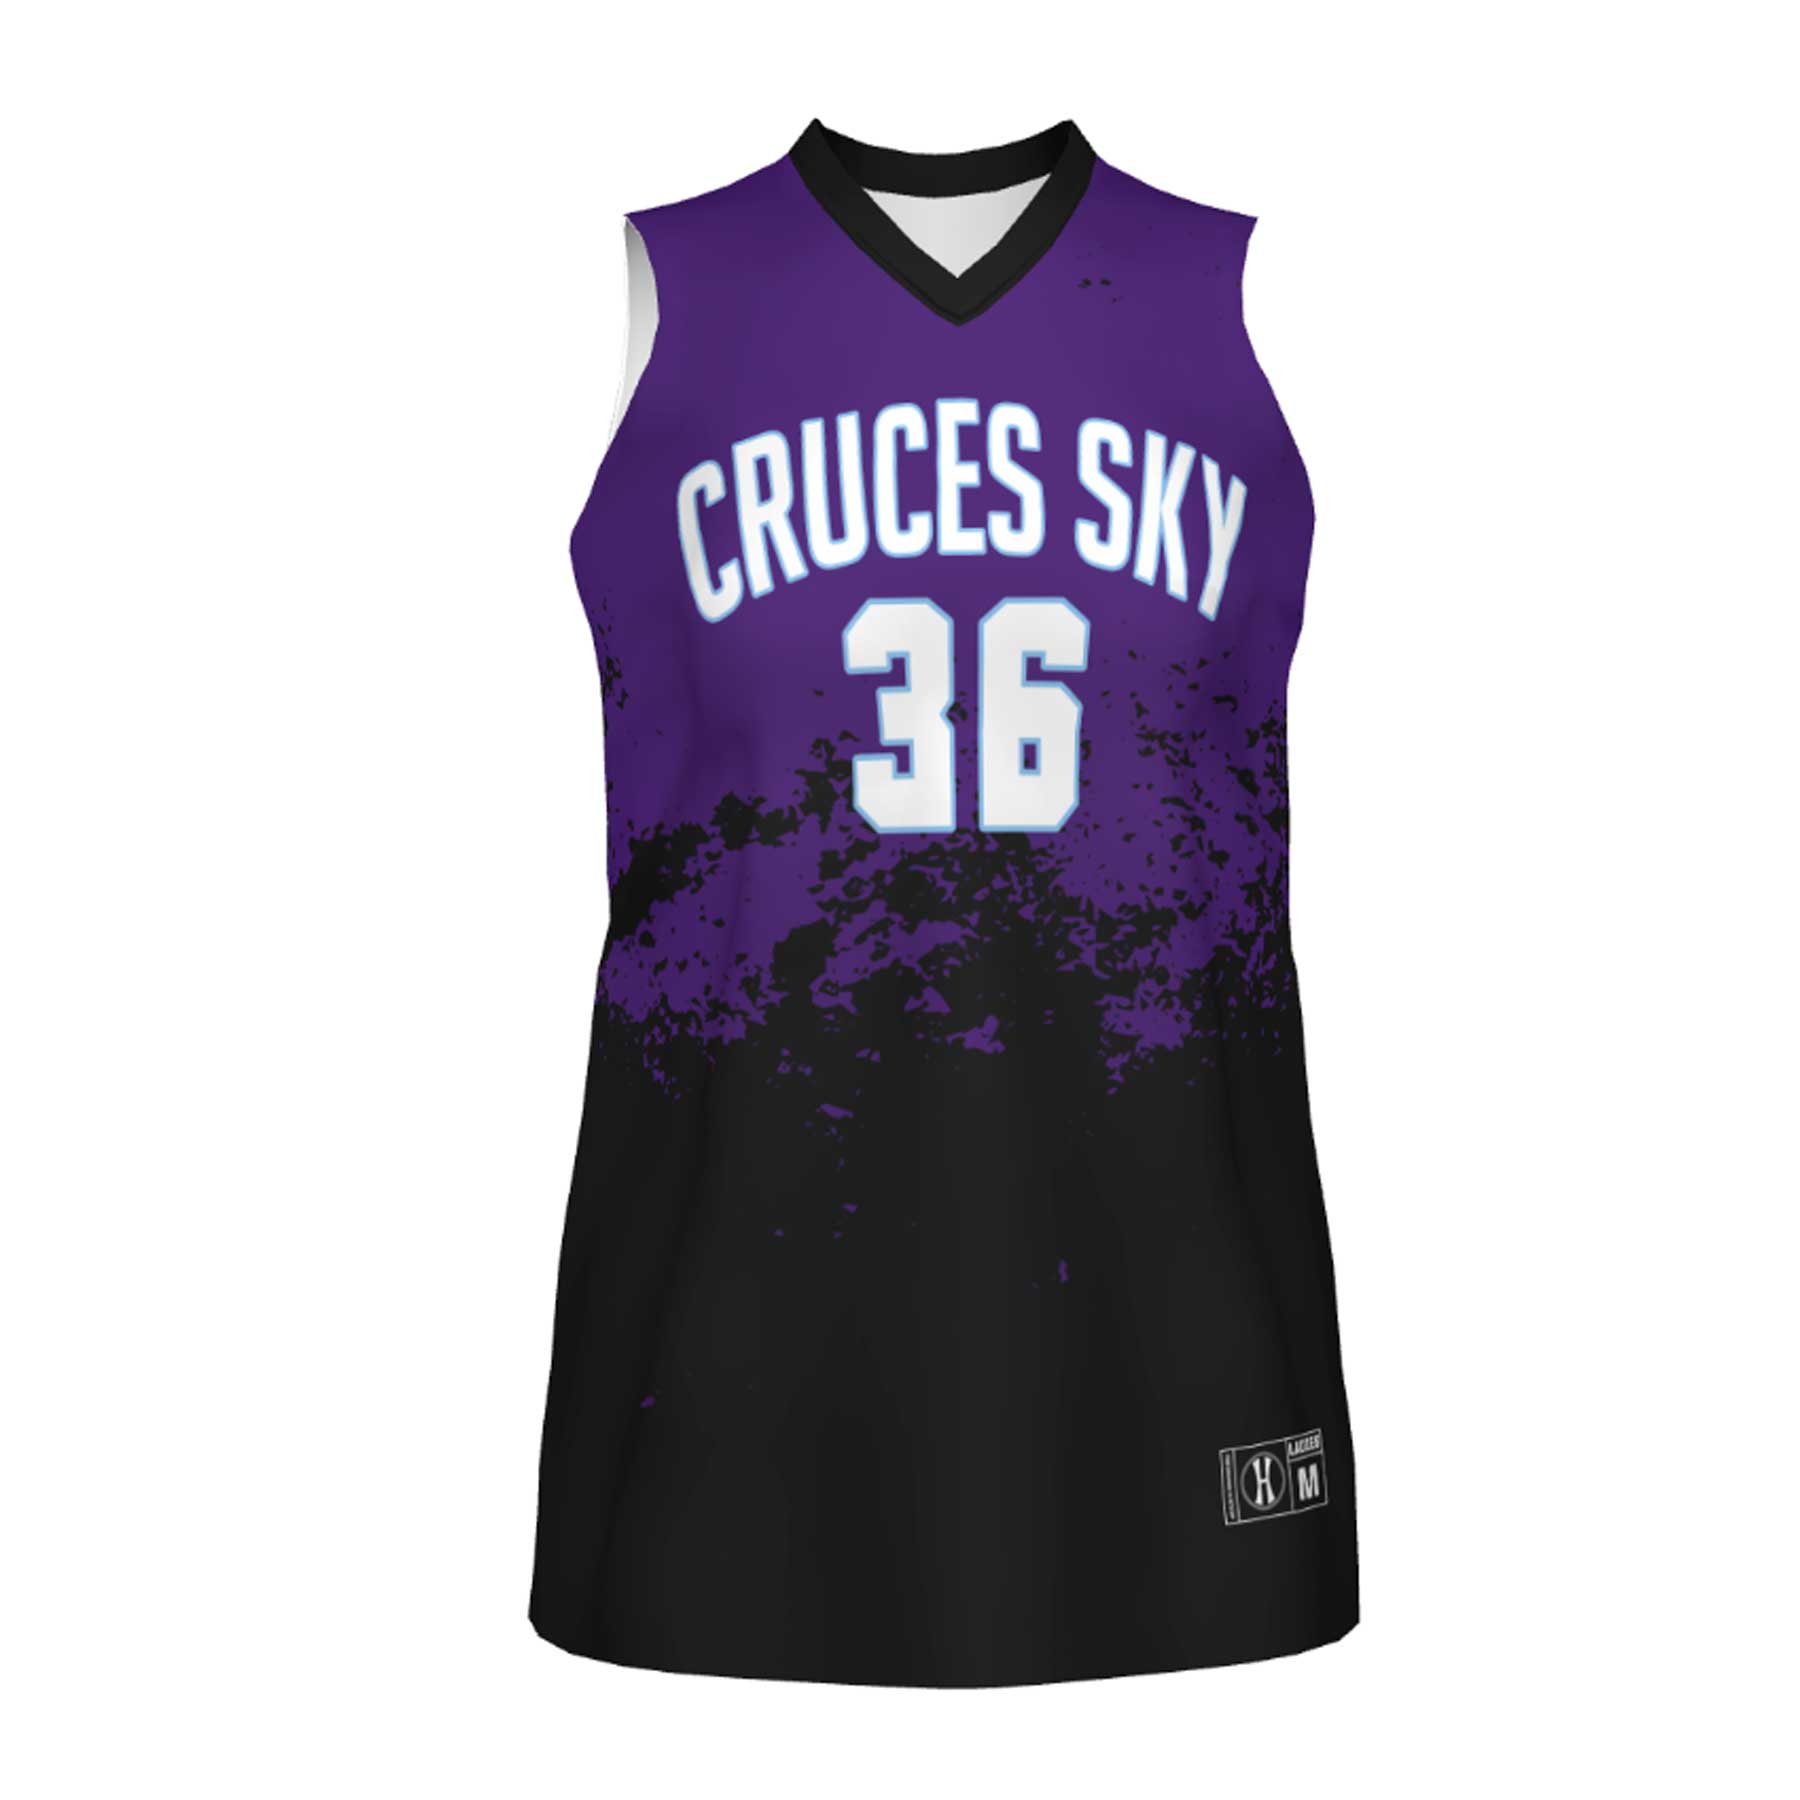 Cruces Sky Basketball Jersey